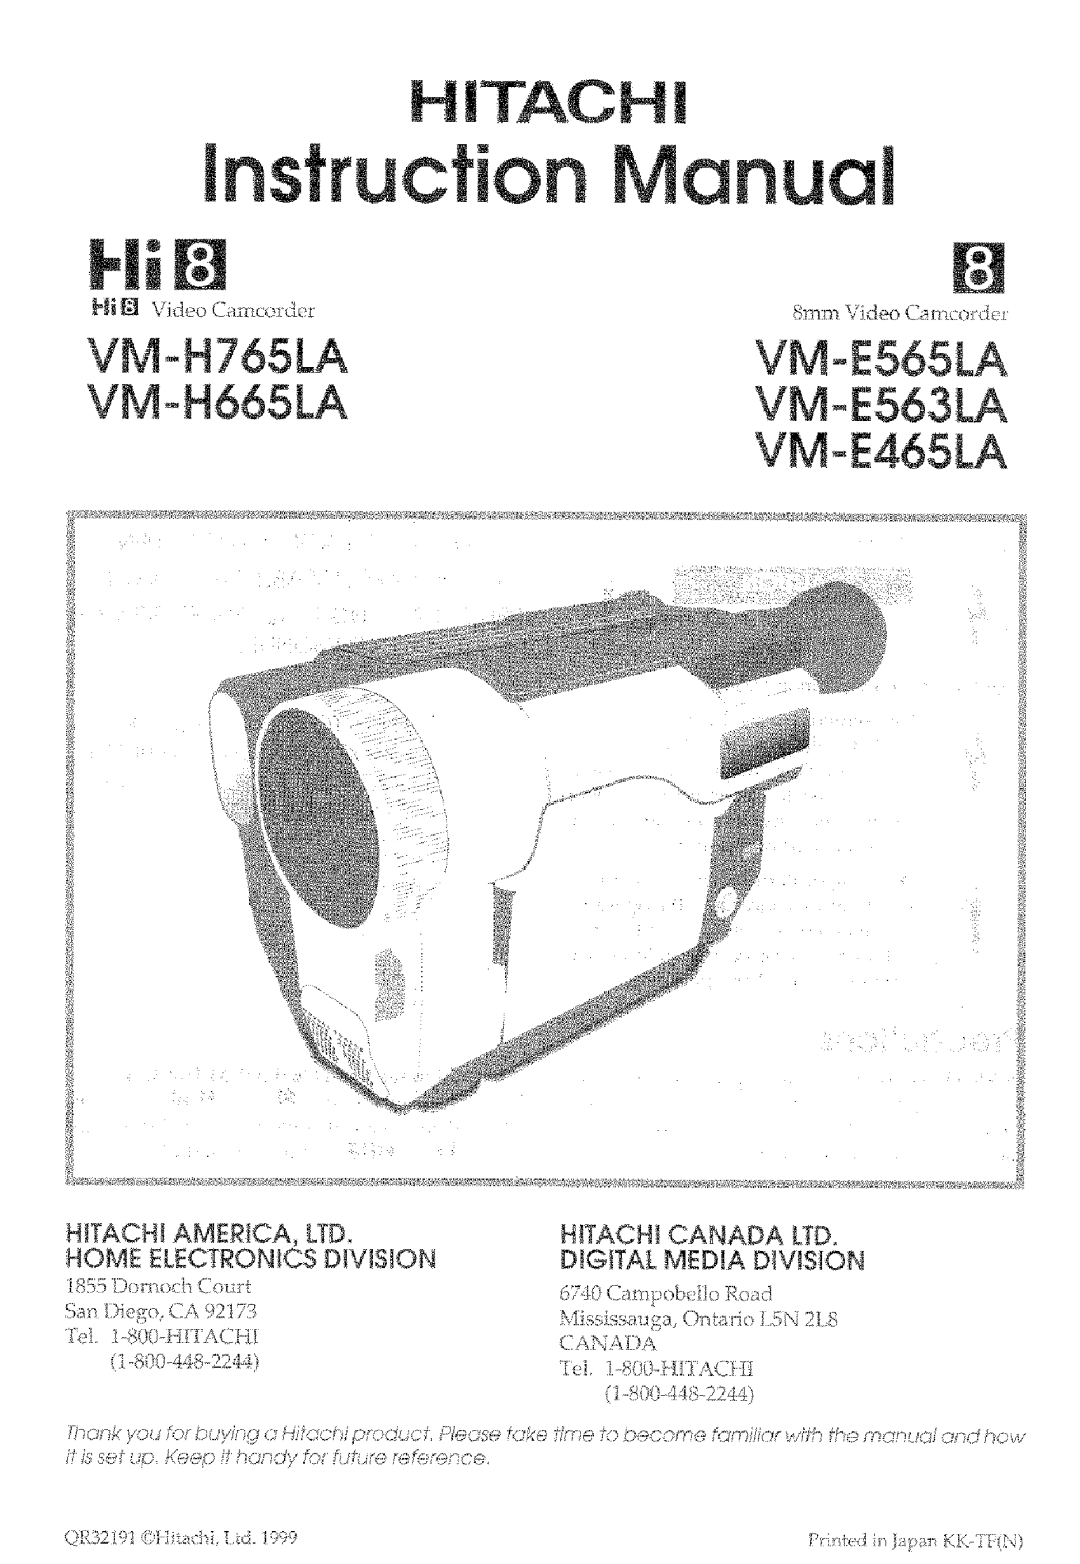 Hitachi VM-E565LA, VM-E465LA manual Home Electronics DiVISiON, FJJ2J Video Camcorder, 8m m Video Ca mclxJe 